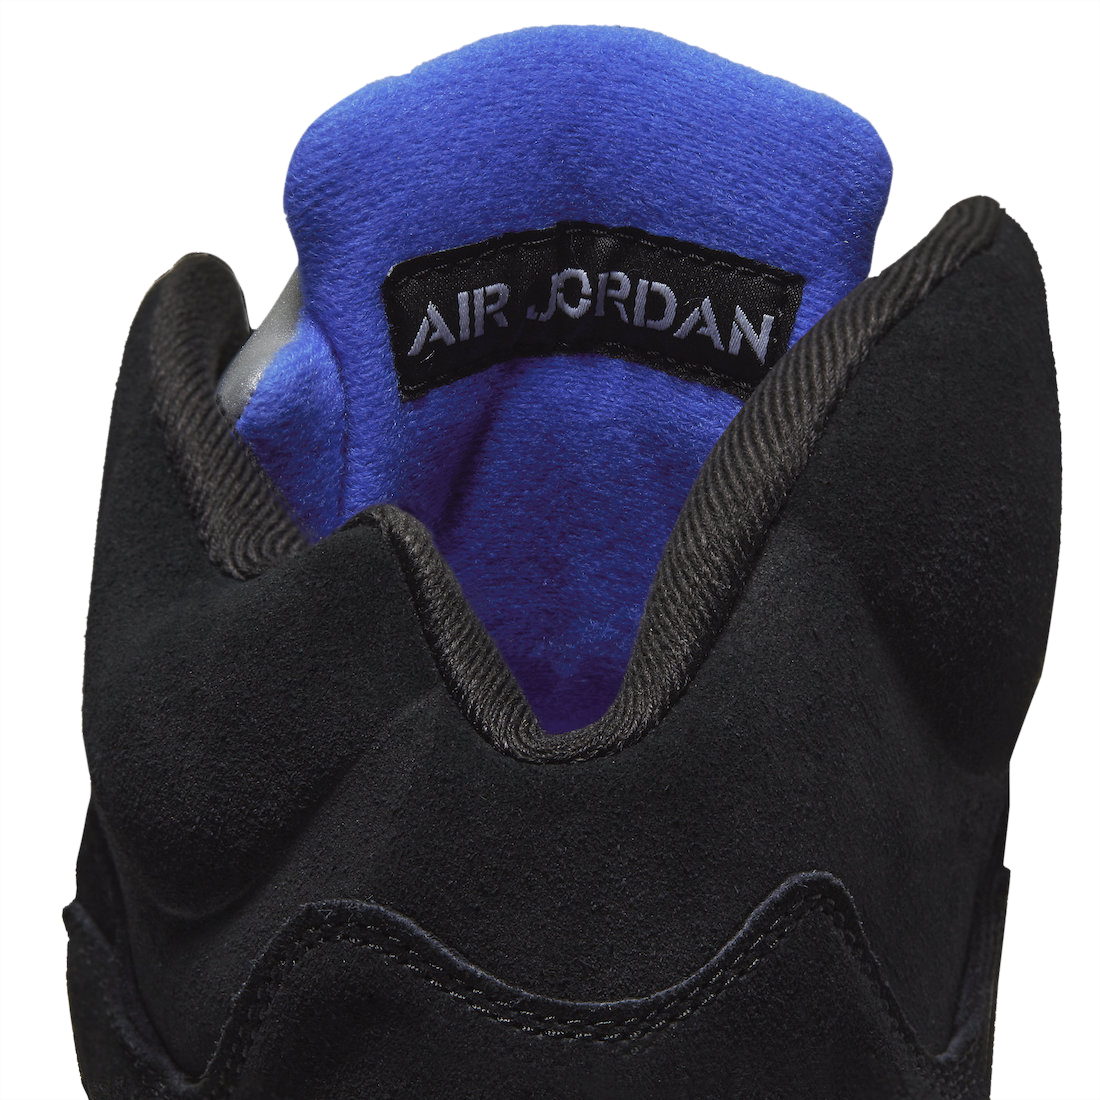 Air Jordan 5 Racer Blue CT4838-004 - KicksOnFire.com